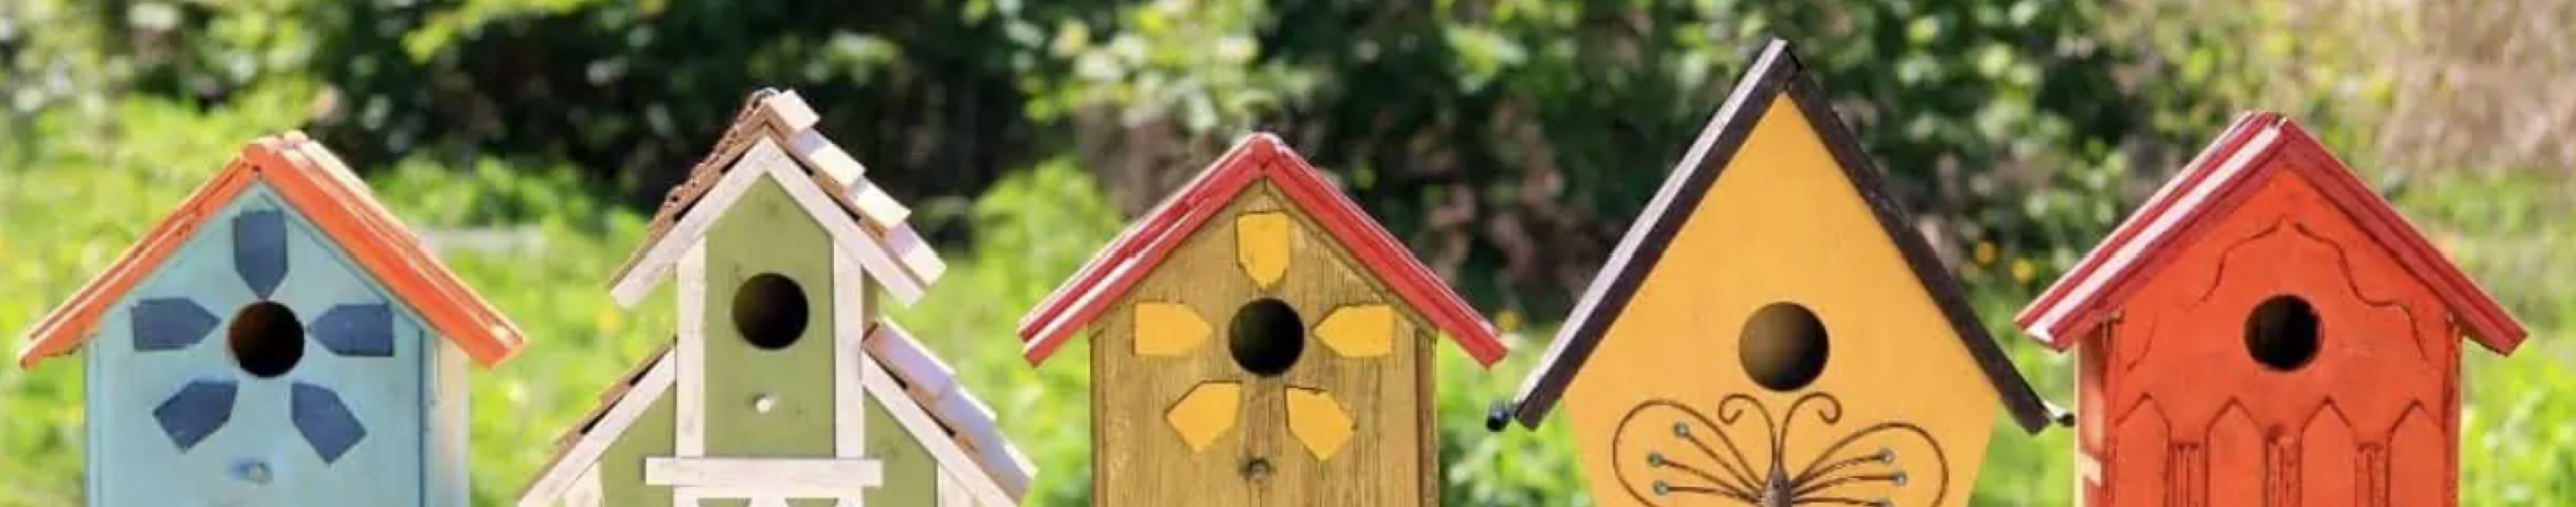 Five colorful birdhouses